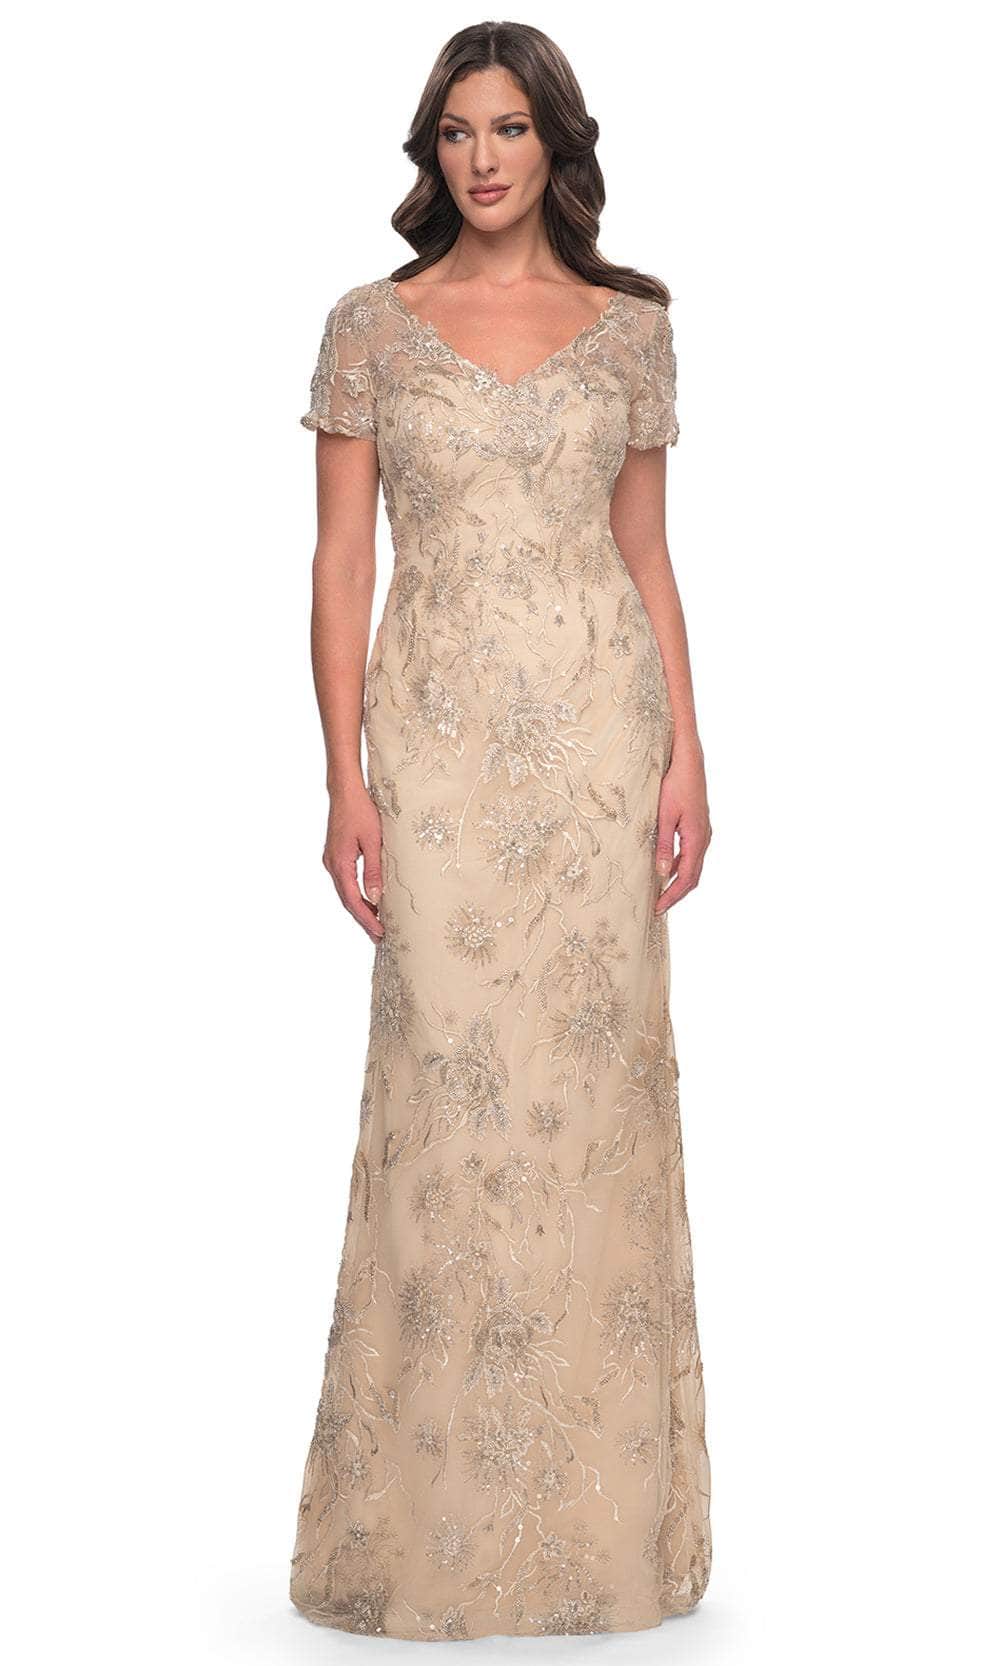 Image of La Femme 30798 - Beaded Lace Evening Dress